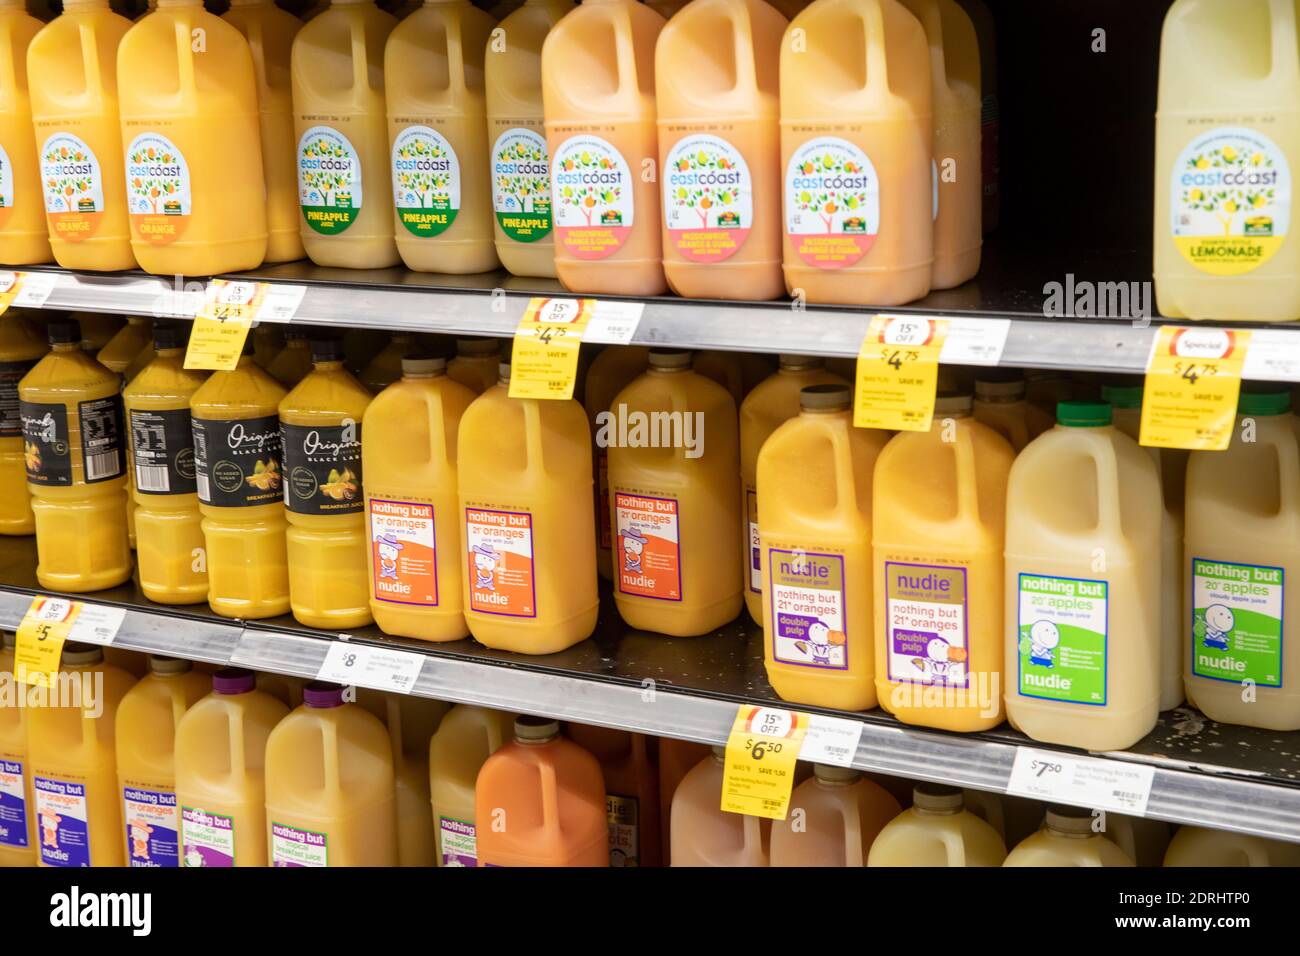 https://c8.alamy.com/comp/2DRHTP0/chilled-fresh-juice-drinks-for-sale-in-an-australian-supermarket-in-sydney-including-nudie-brand-drinks-2DRHTP0.jpg